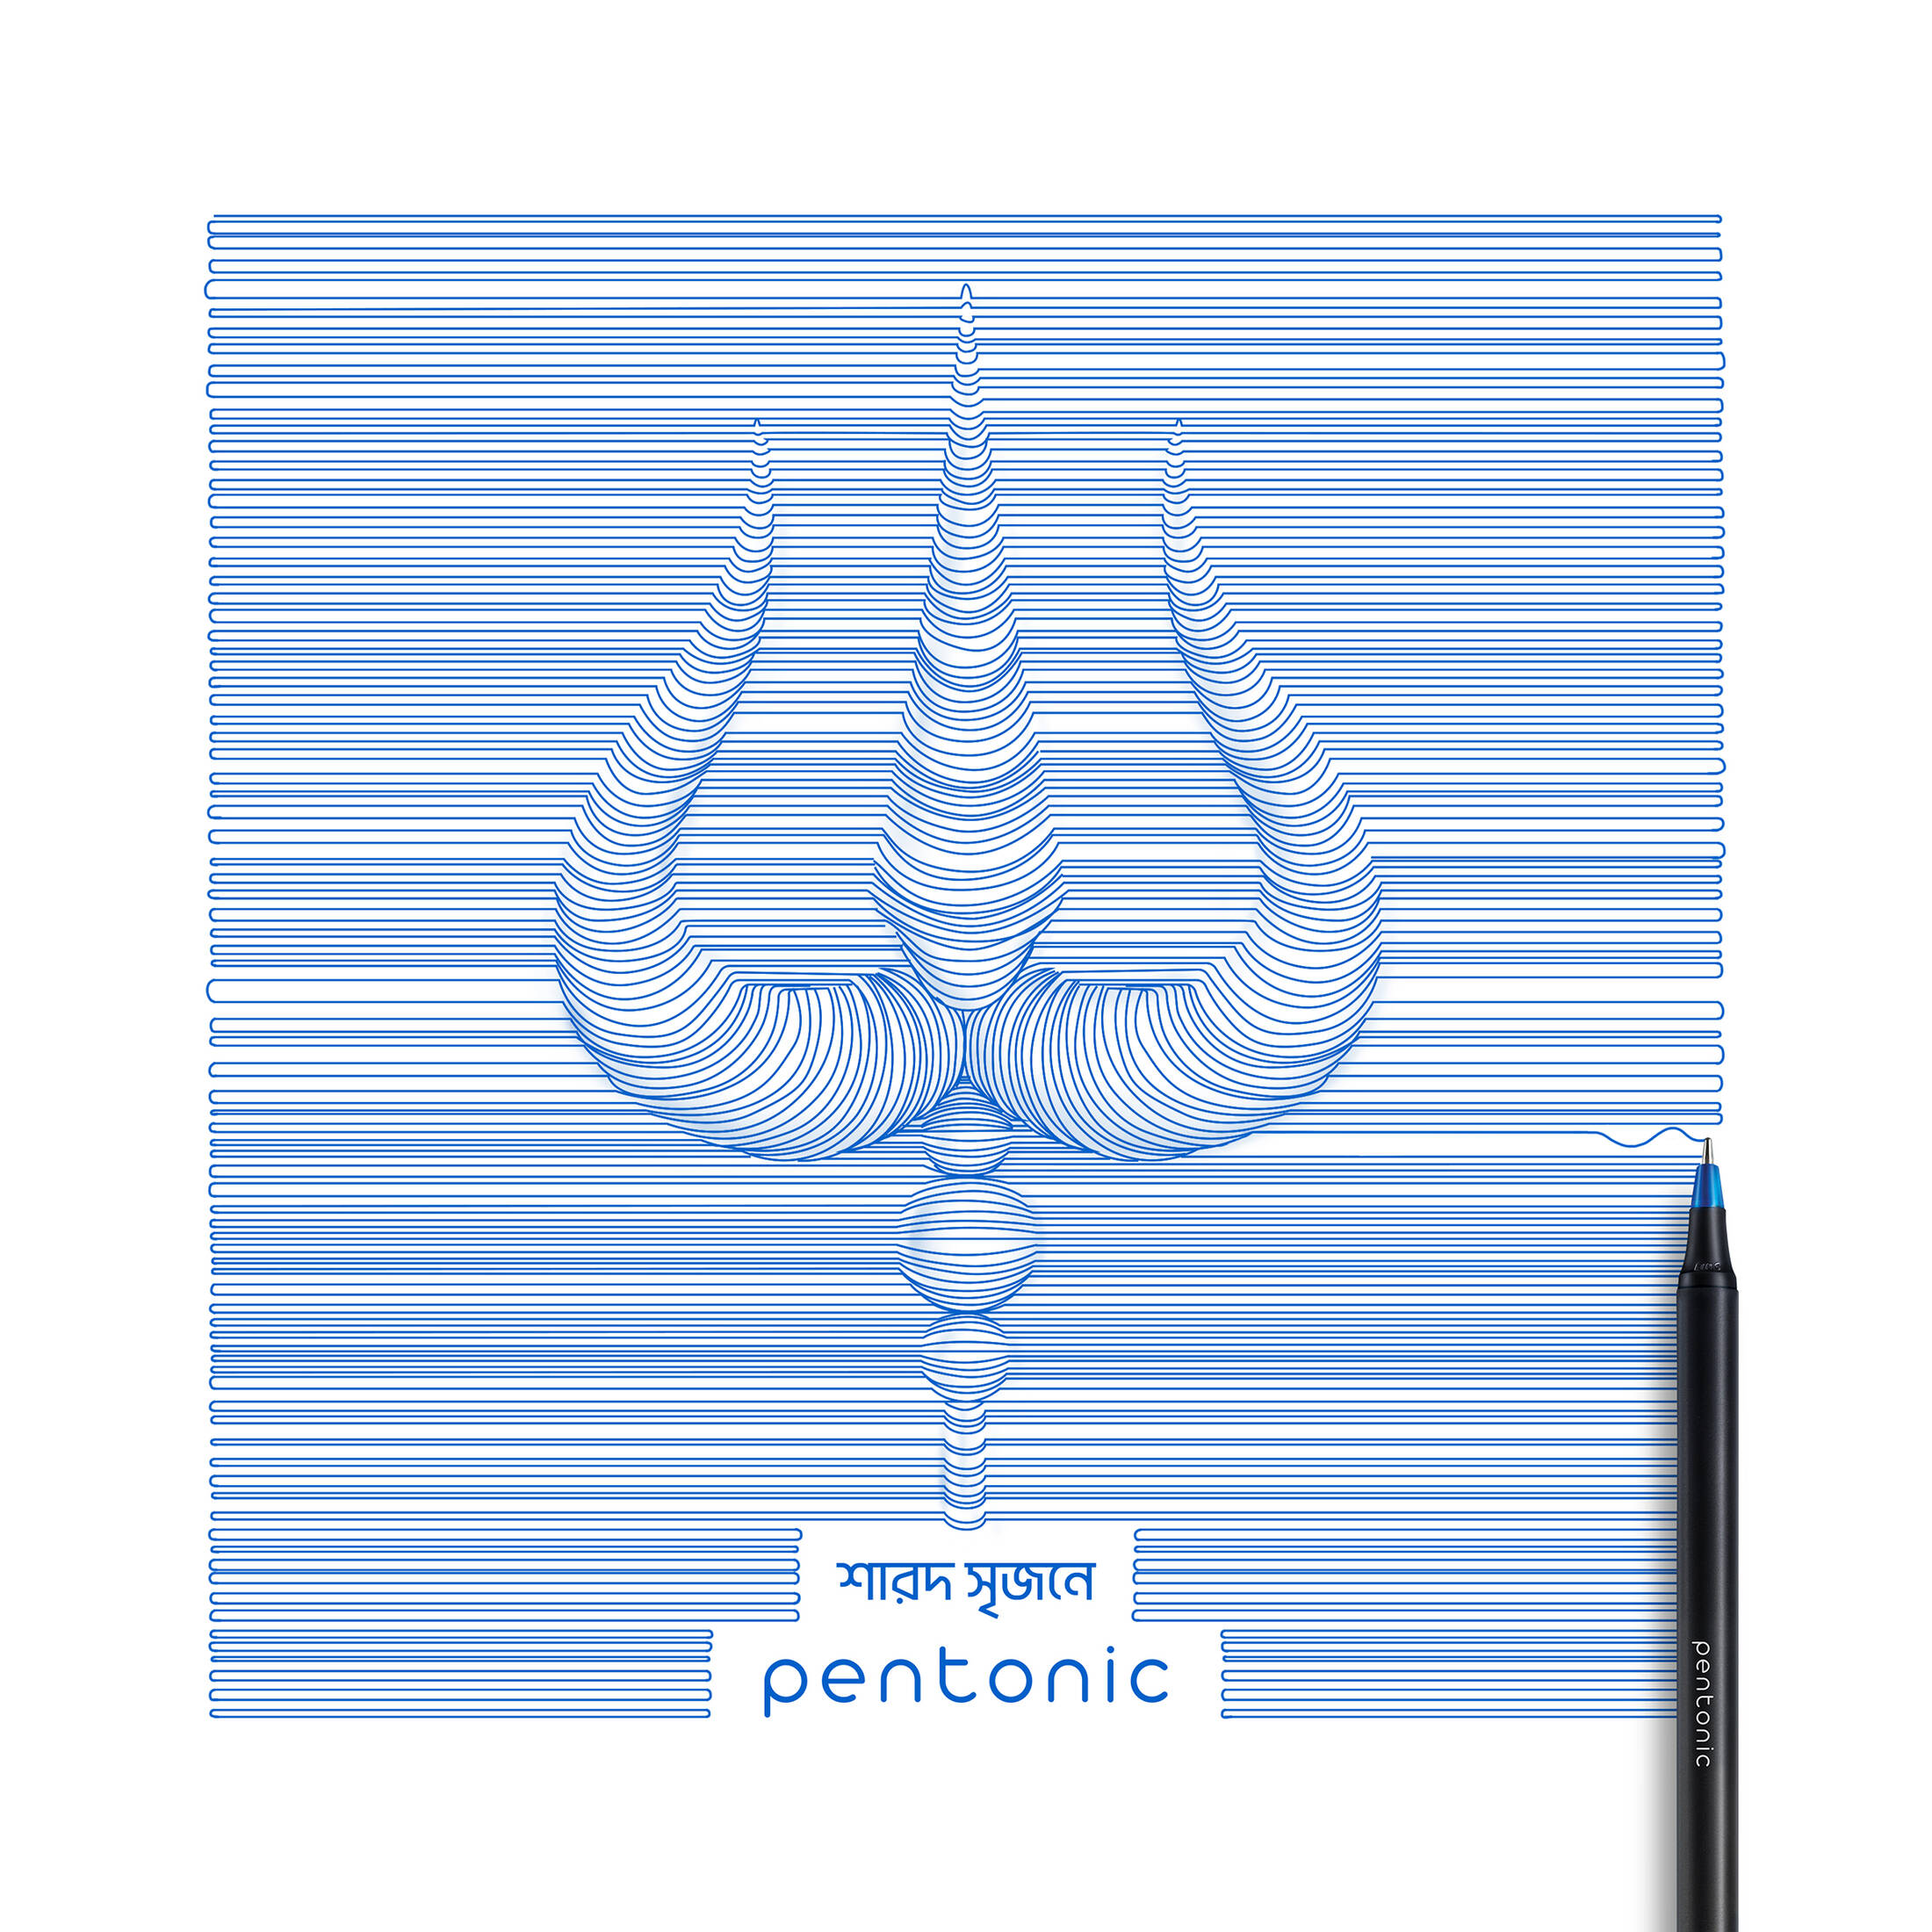 印度Pentonic的Sharod,Srijone专业活动平 . 印度Pentonic的Sharod Srijone专业活动平面广告设计